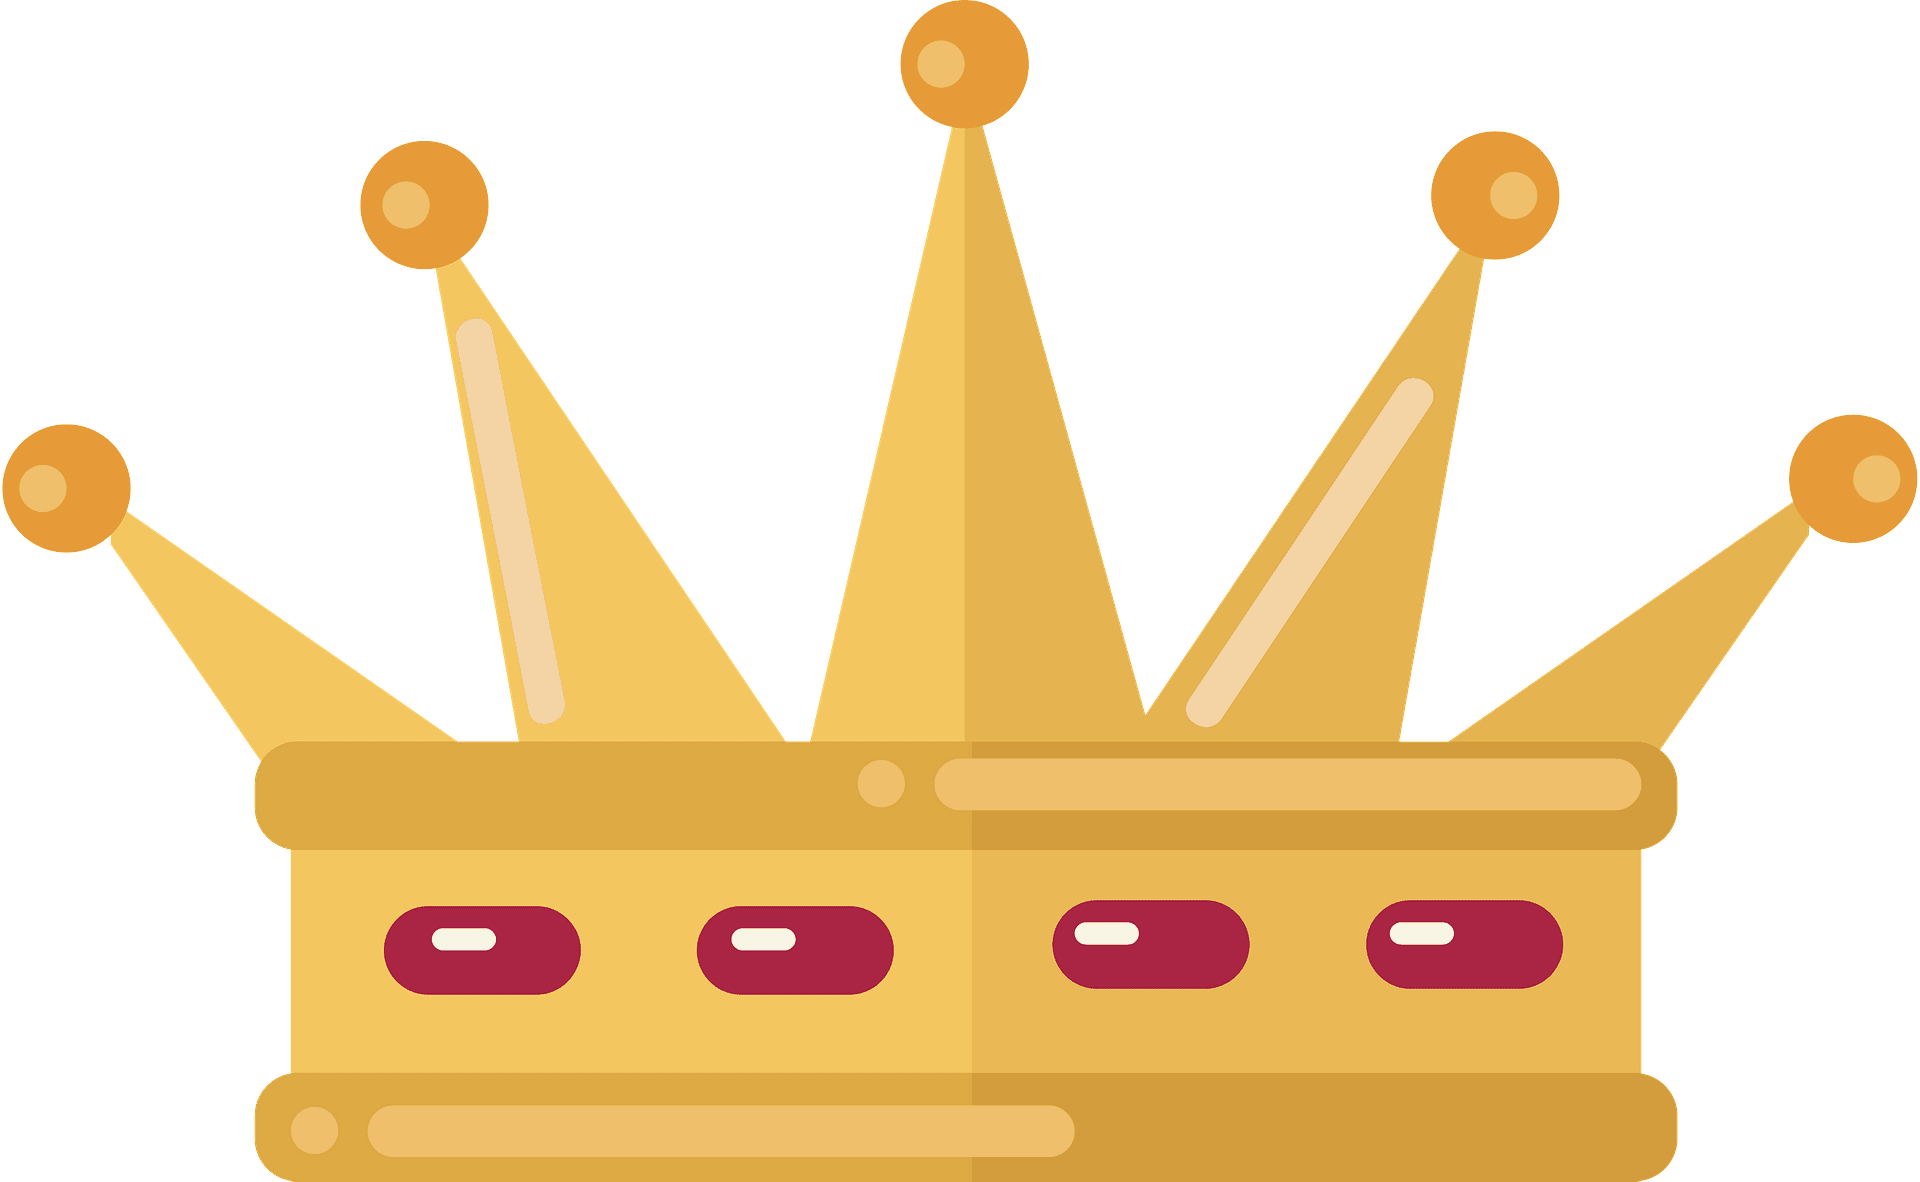 Queen crown clipart image 2